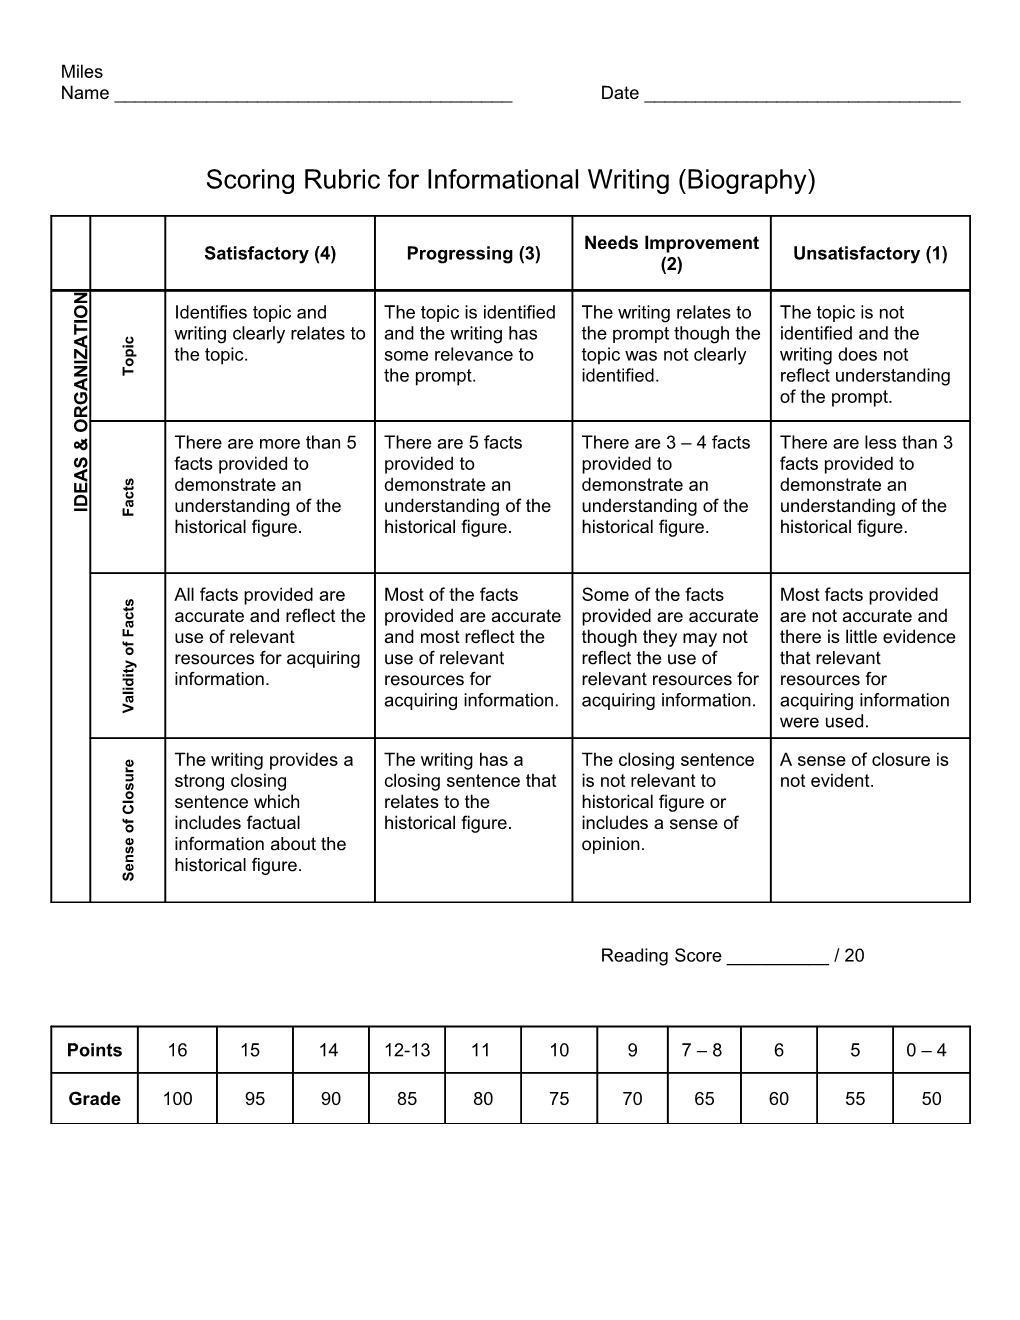 Scoring Rubric for Informational Writing(Biography)